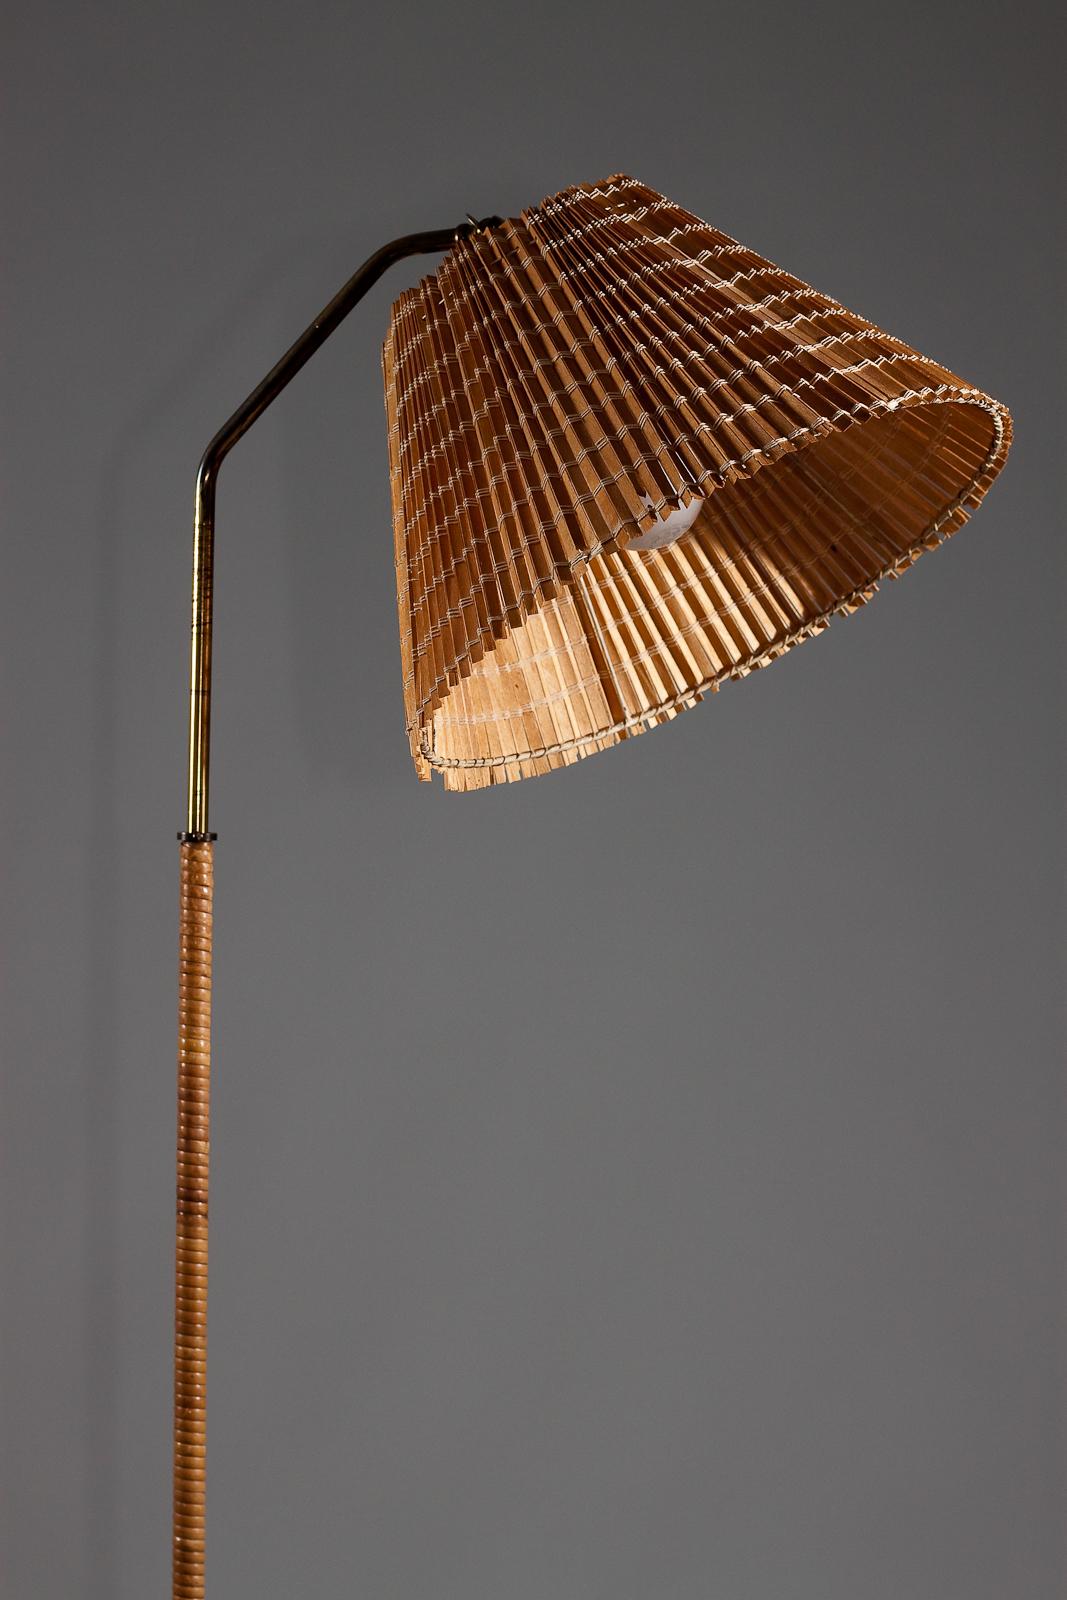 Scandinavian Modern Finnish 1950's brass floor lamp with wrapped rattan stem and wooden slat shade